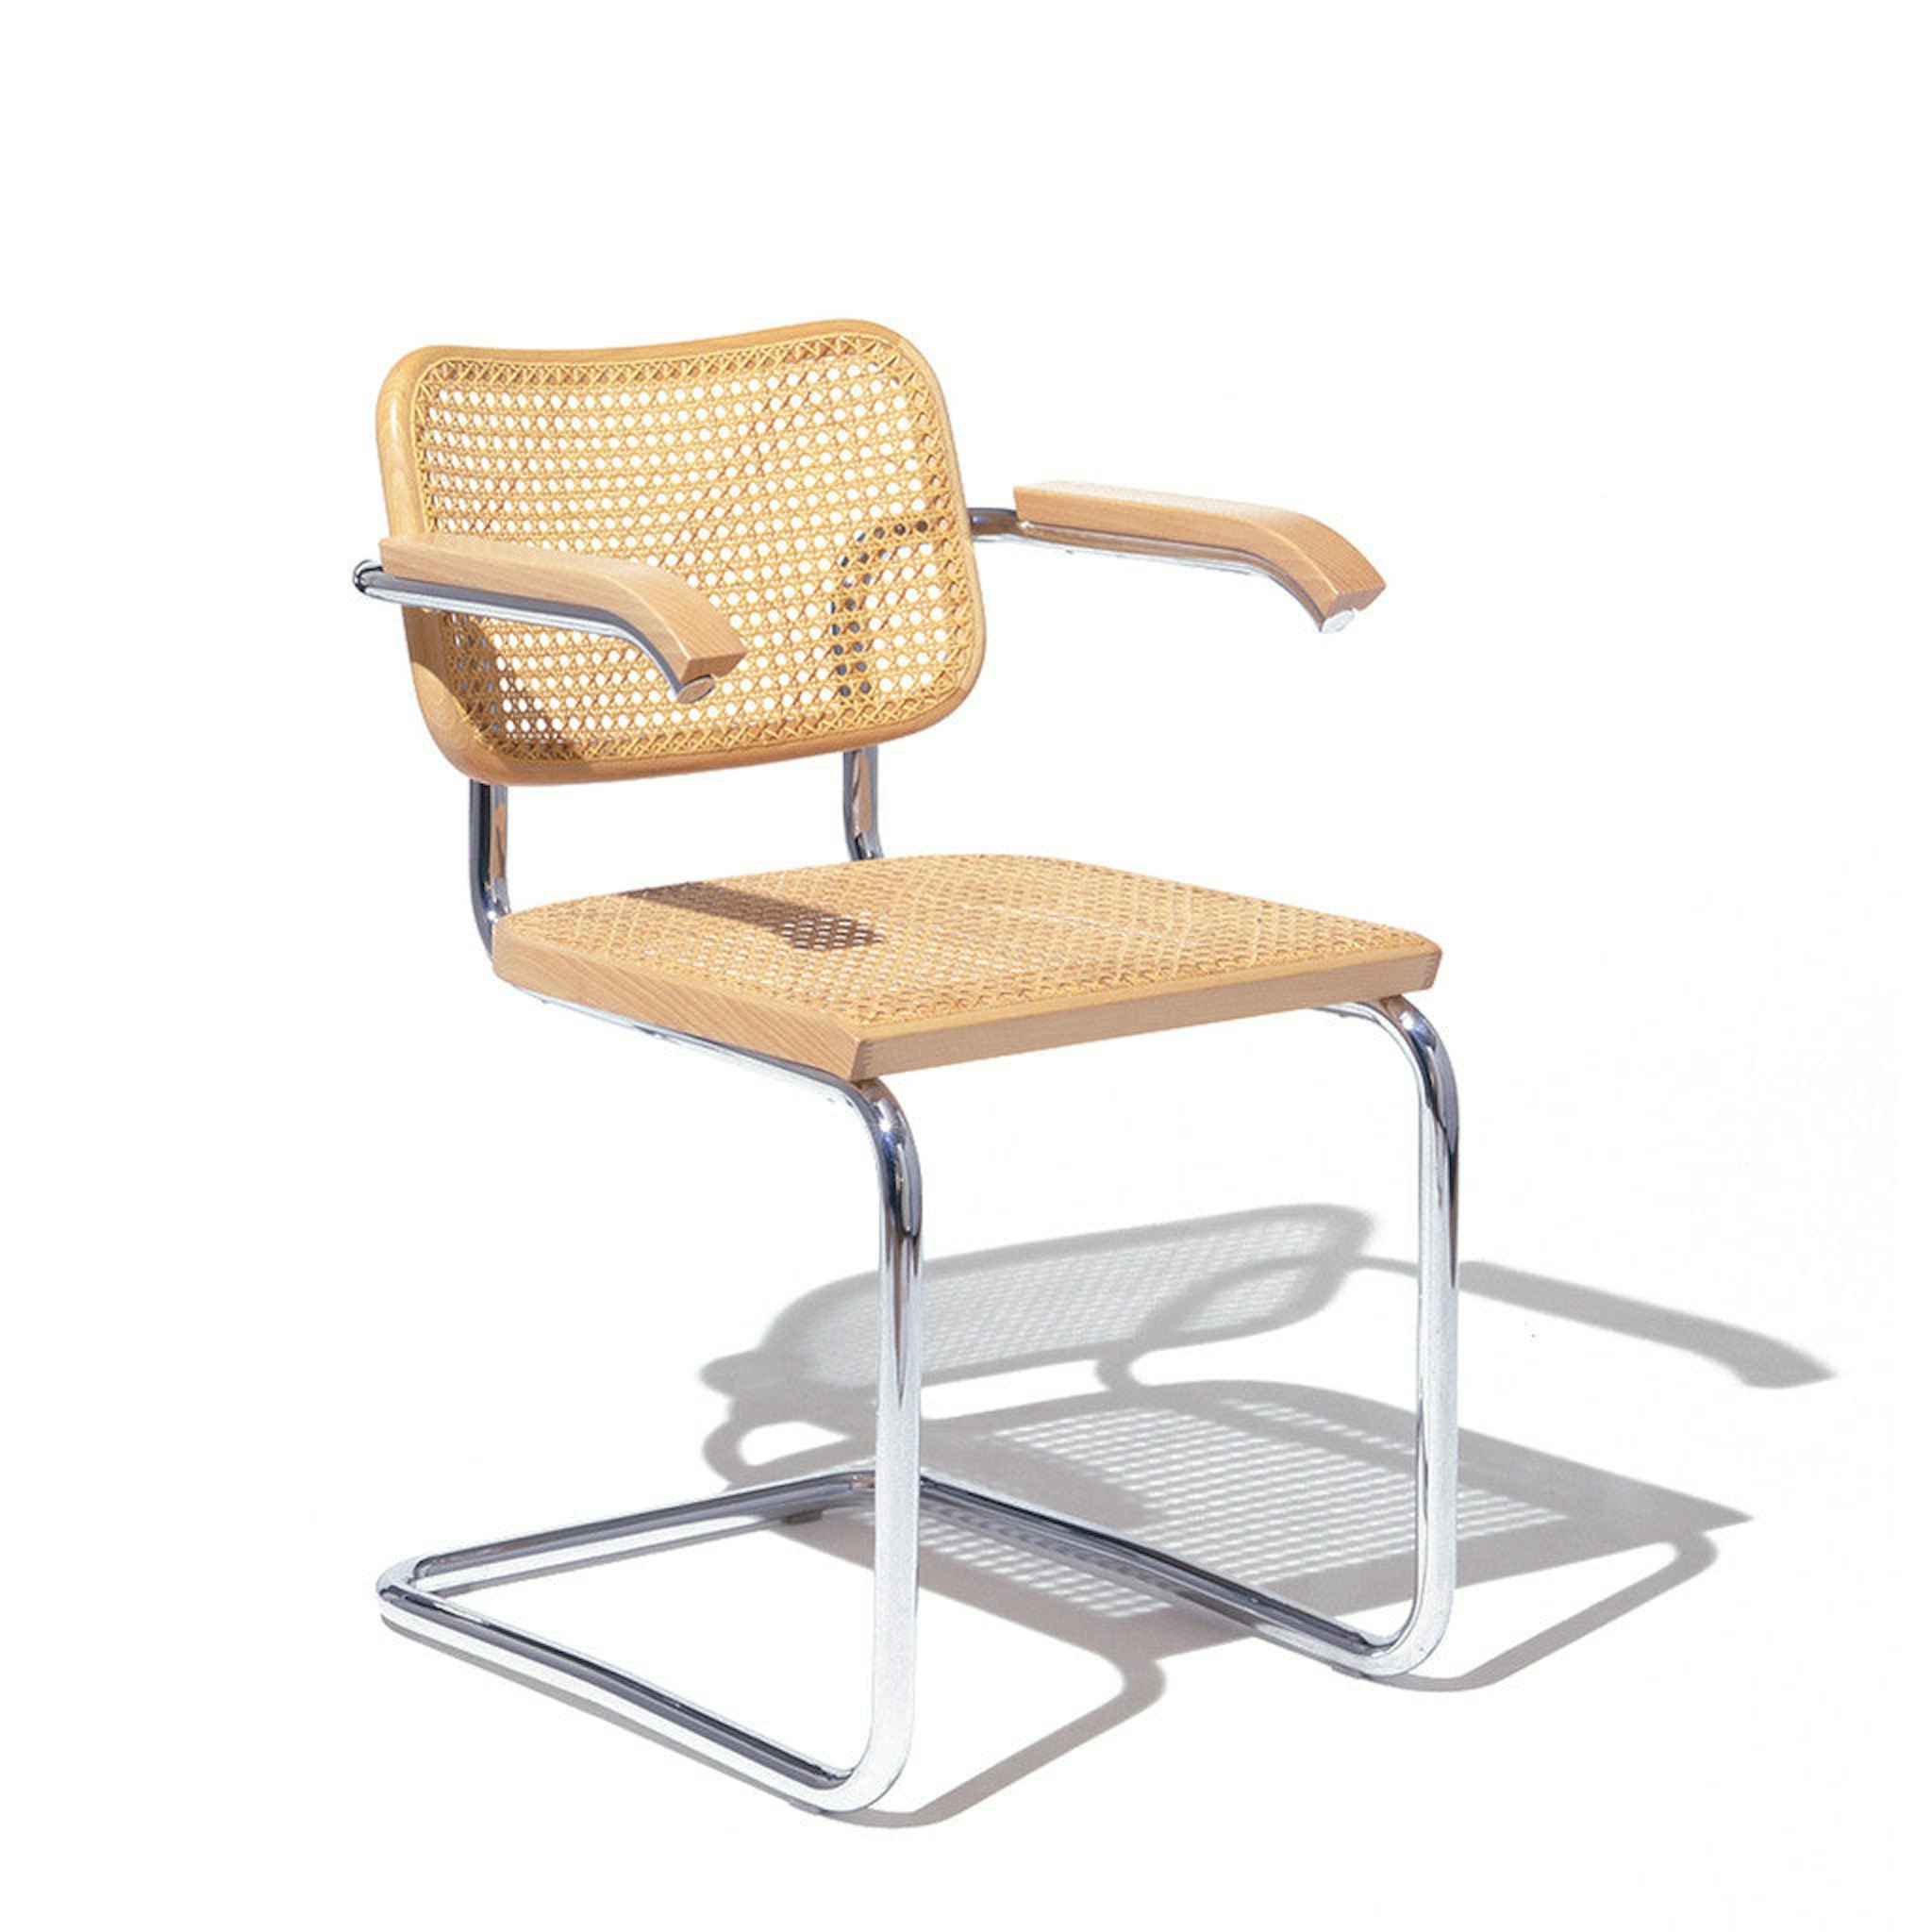 Cesca Chair by Knoll